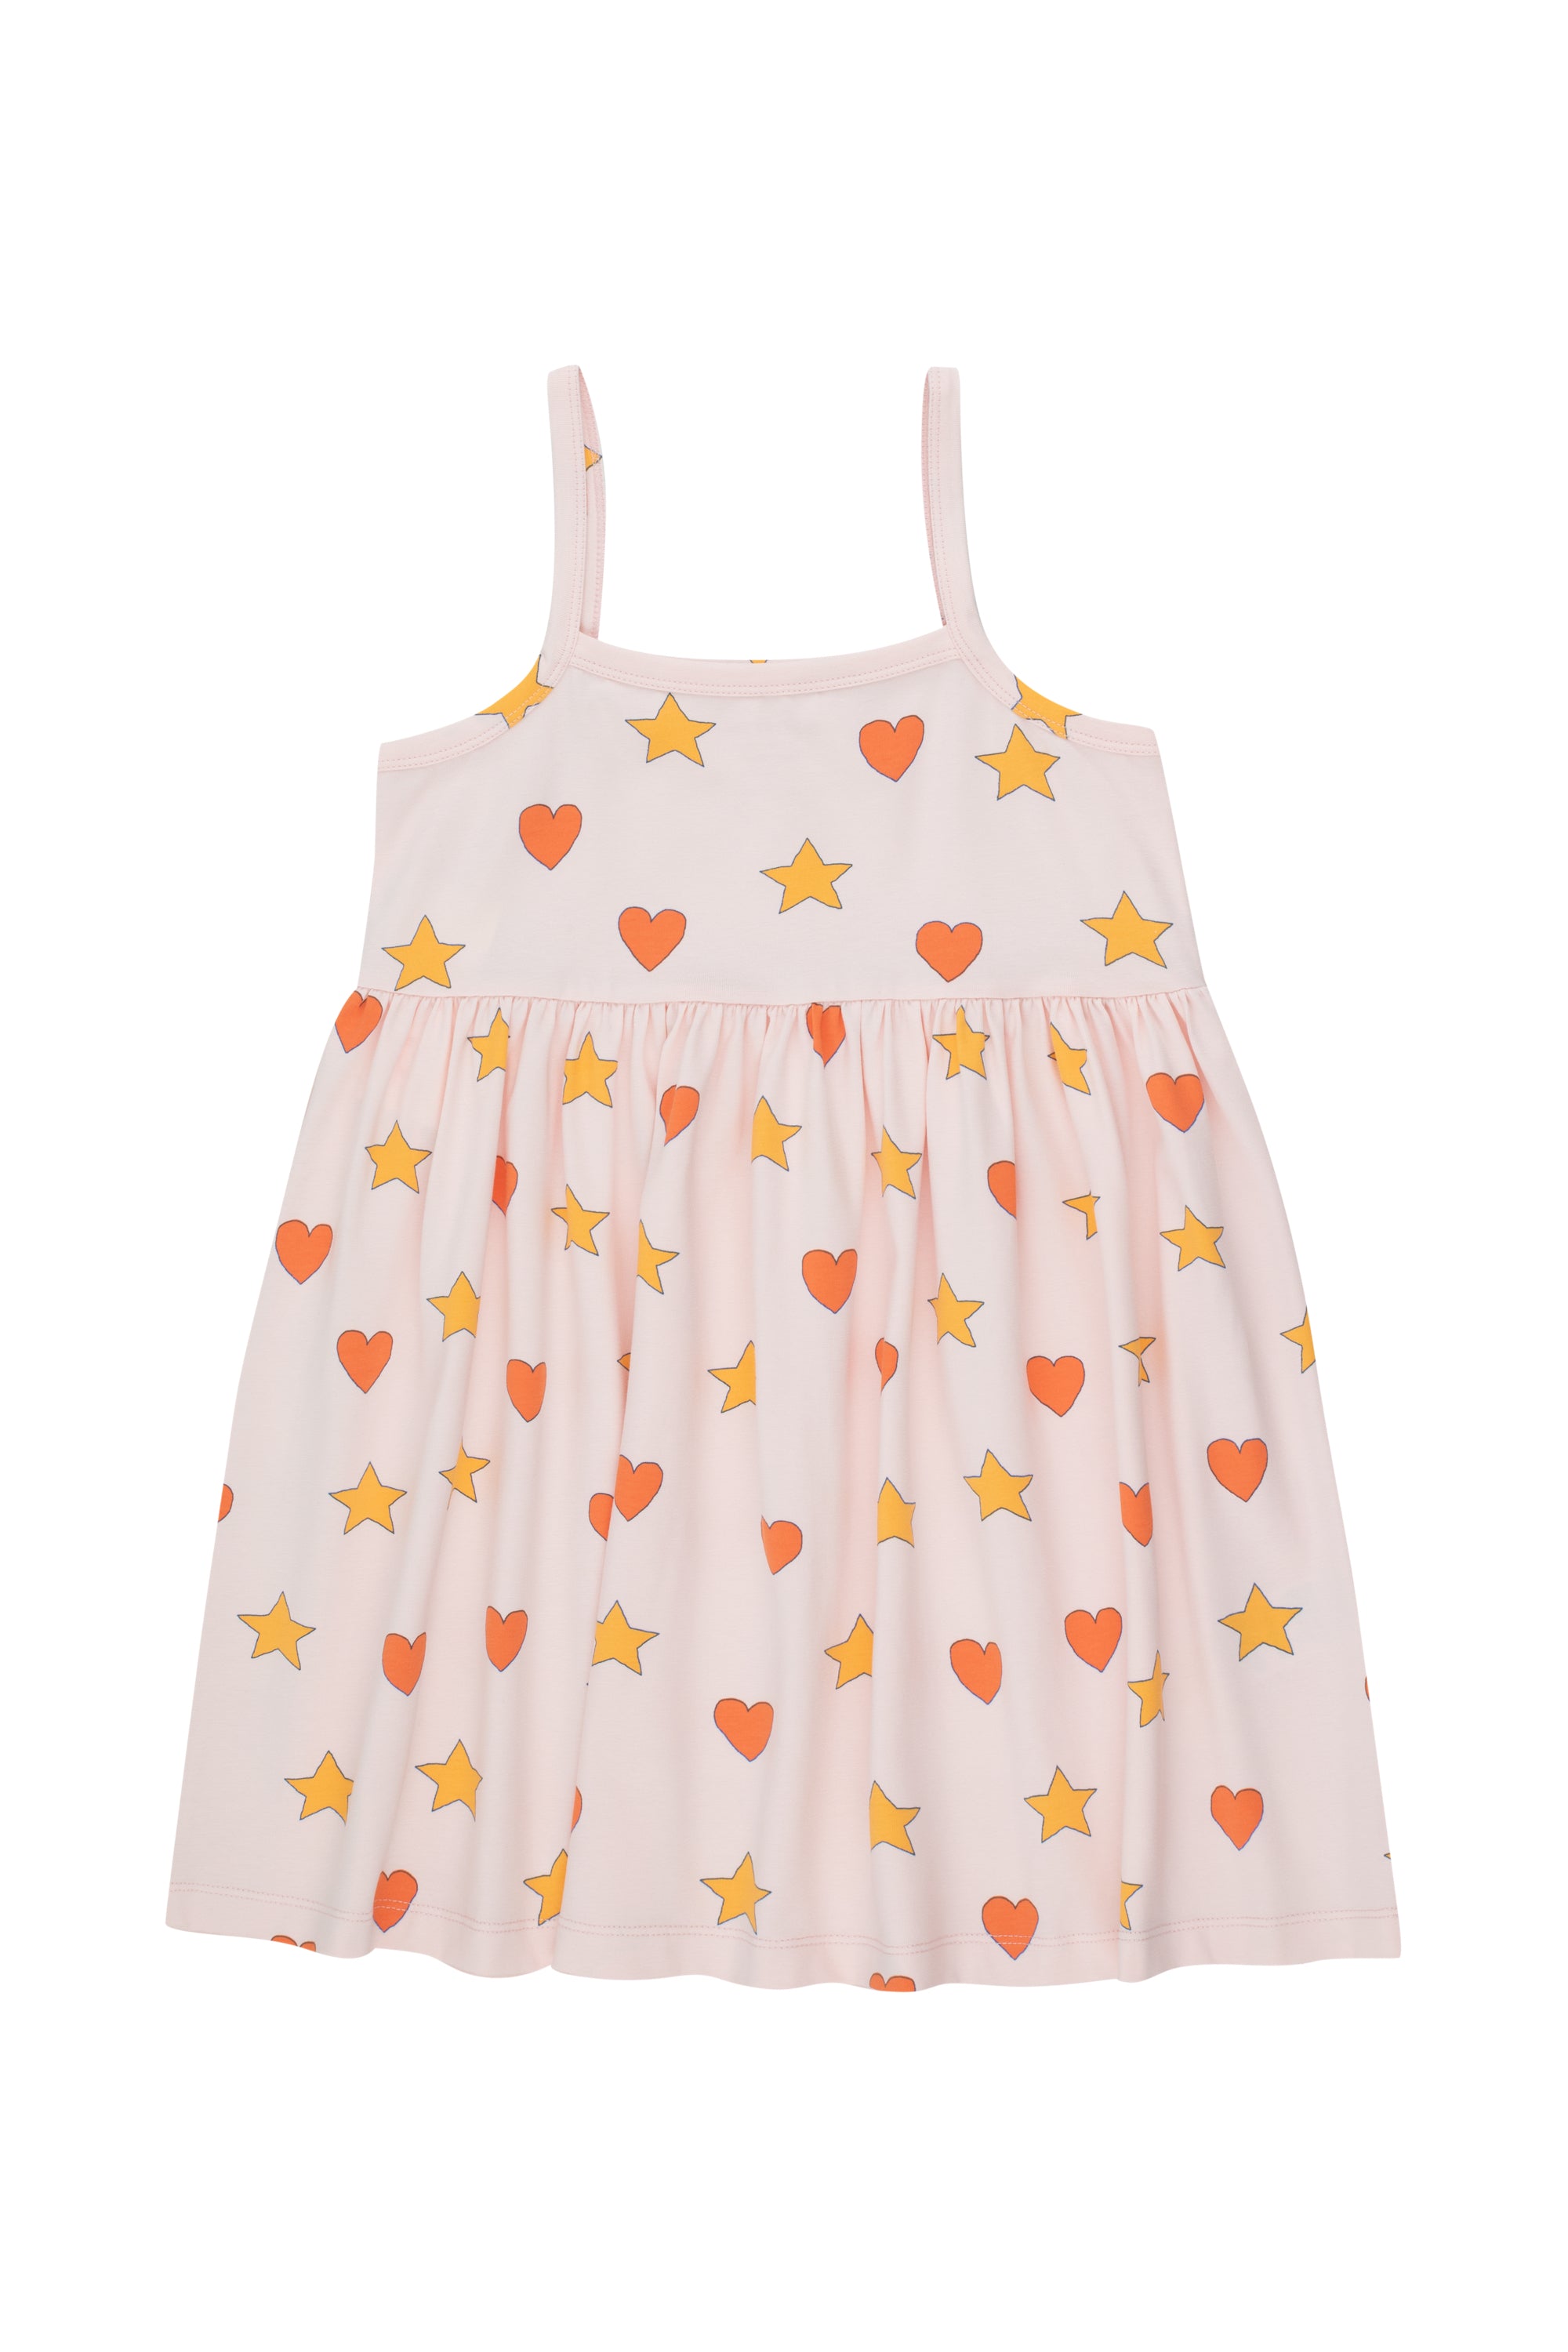 TinyCottons Hearts Stars Dress